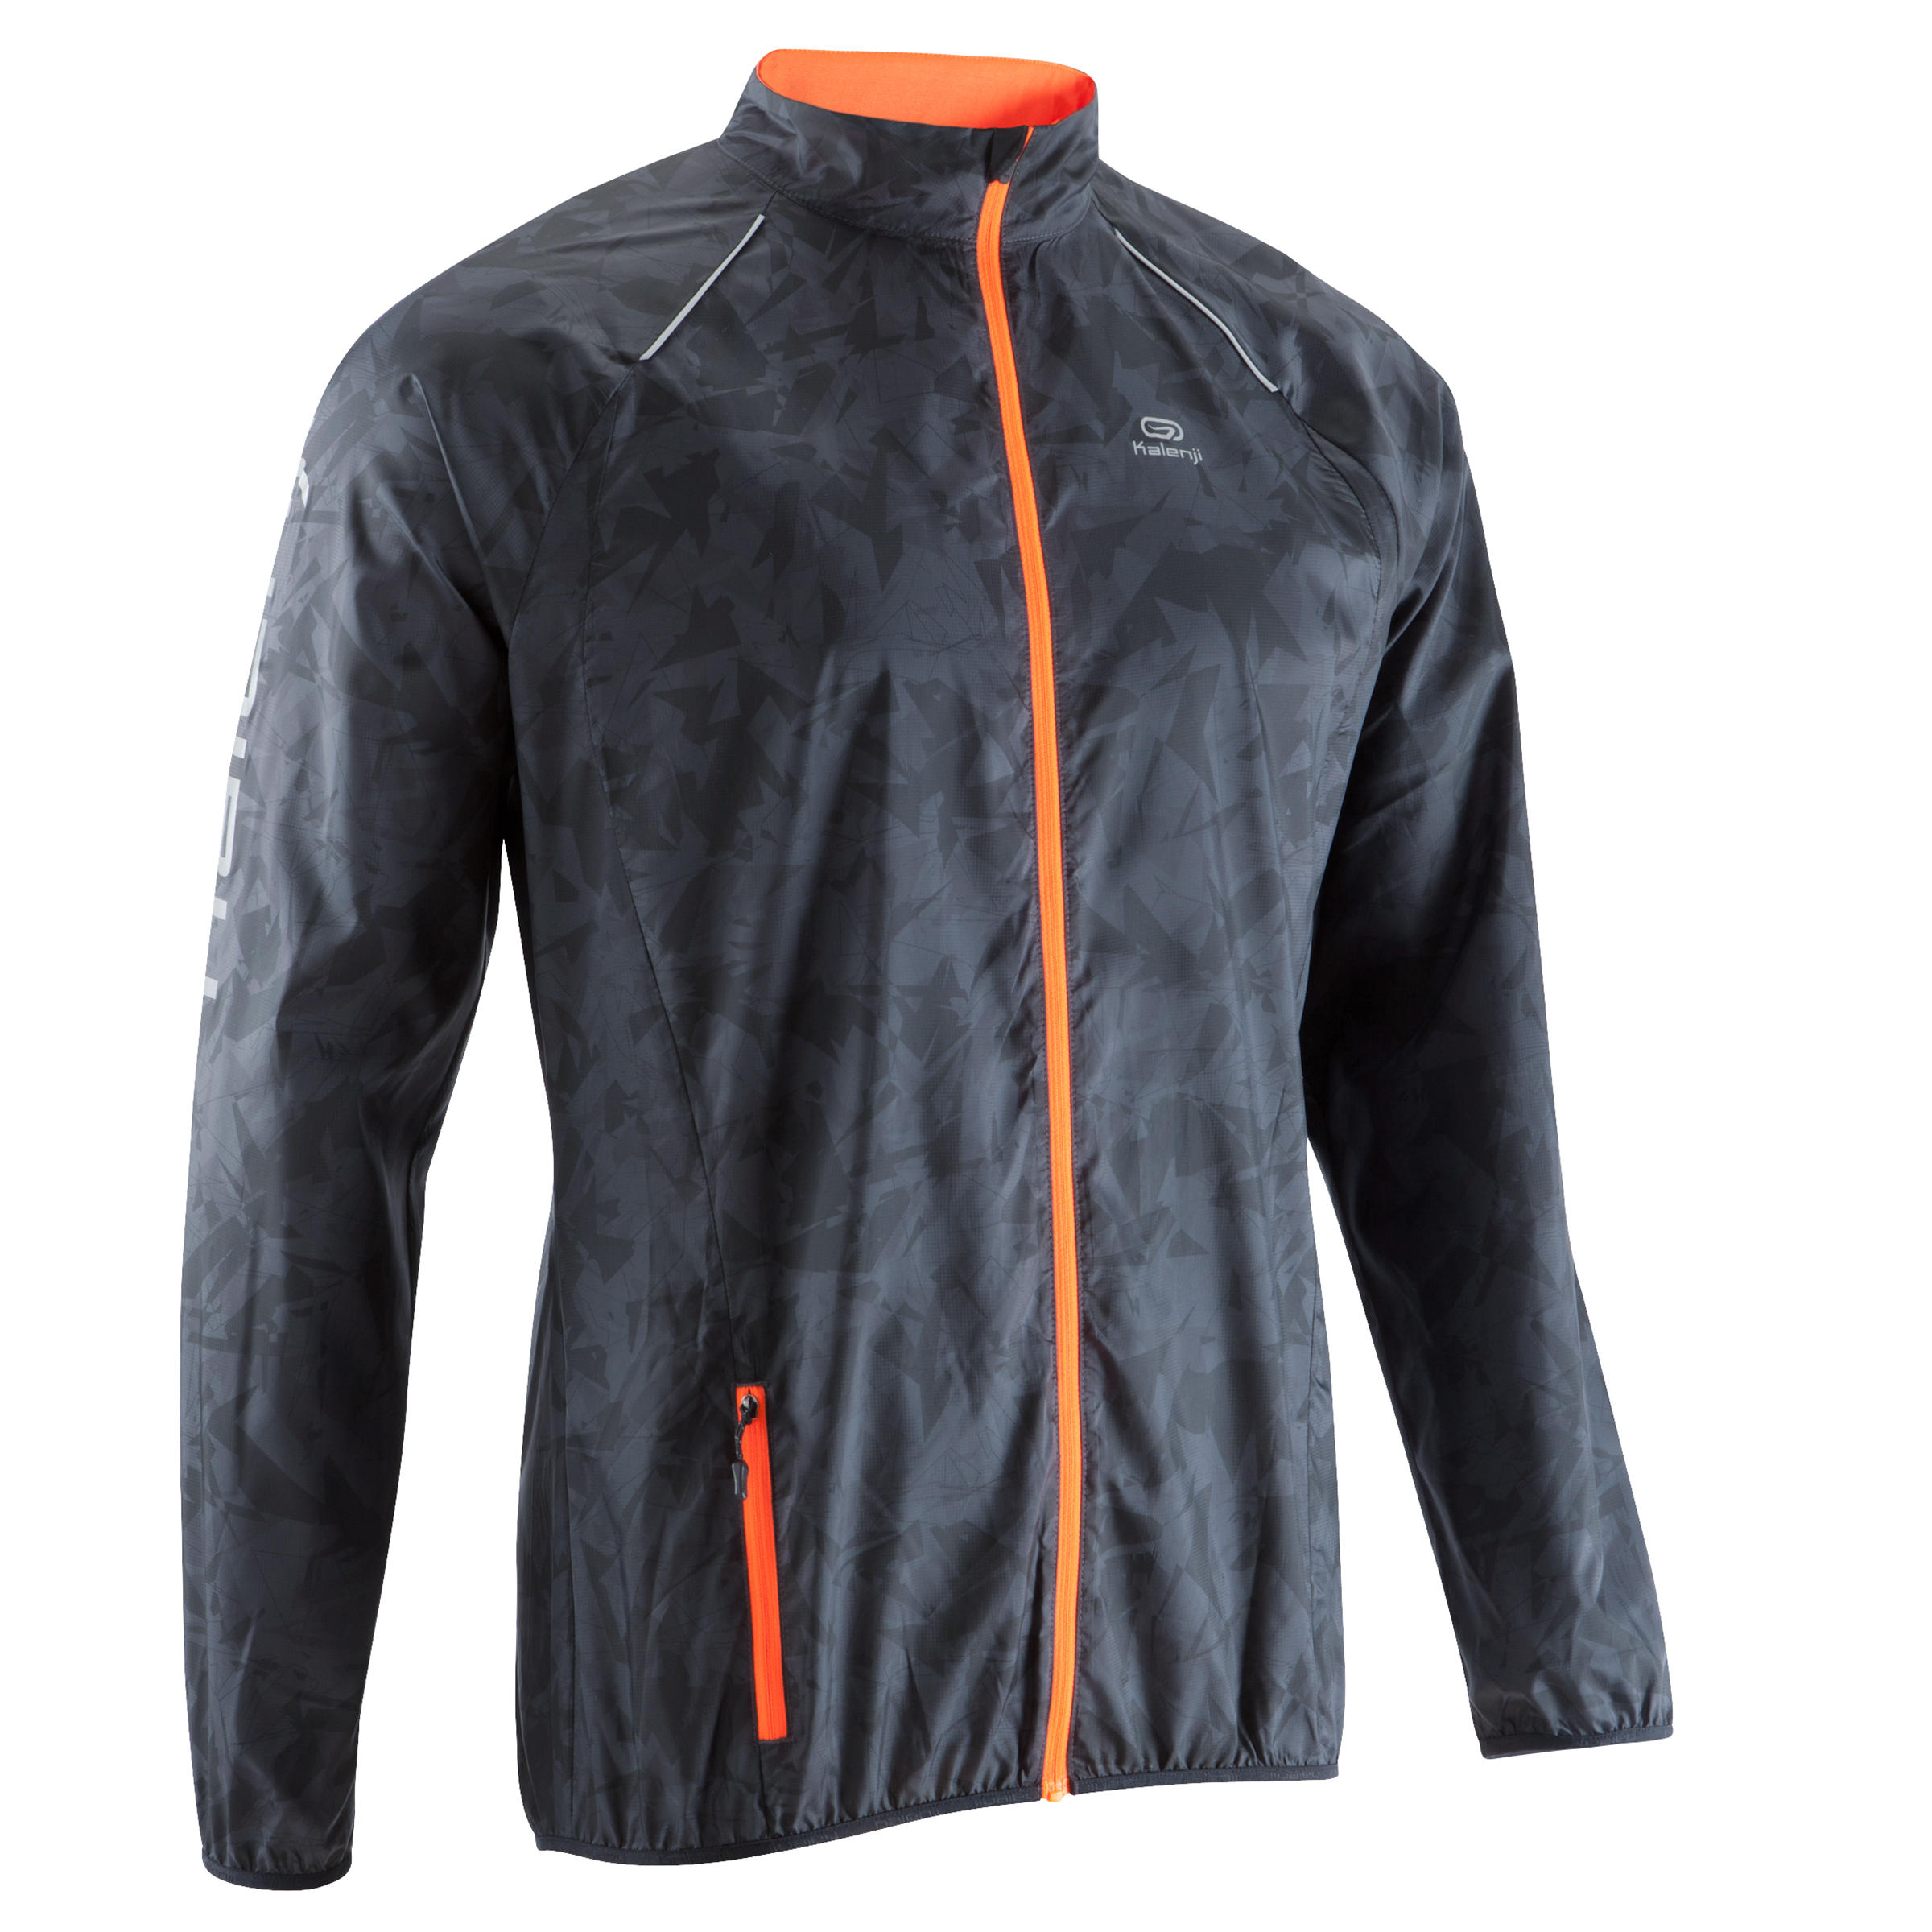 KALENJI Men's Trail Running Windproof Jacket - Grey/Black